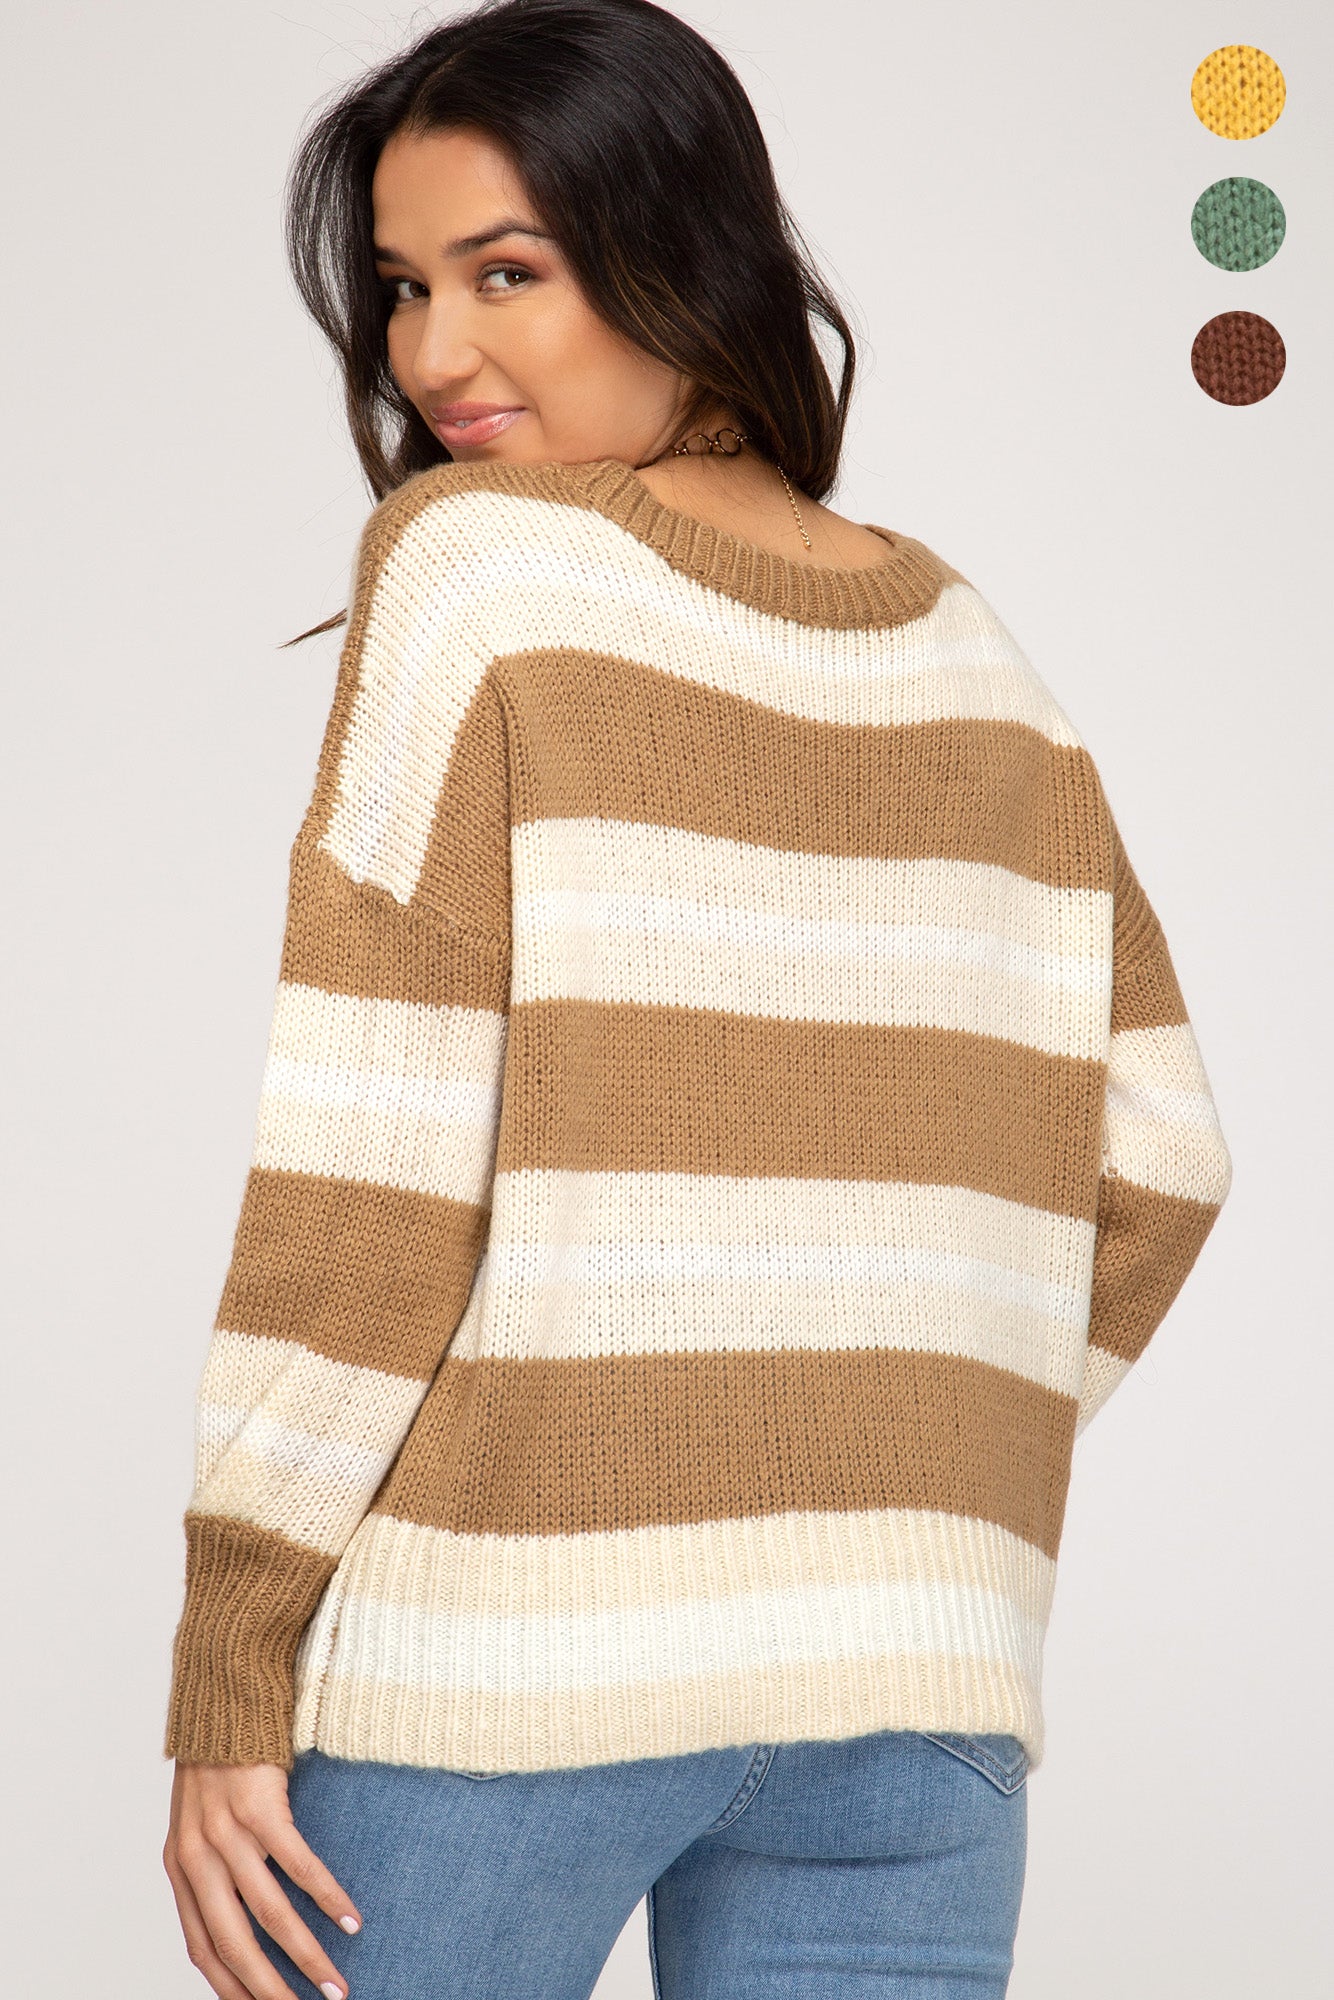 Holidaze Stripe Sweater